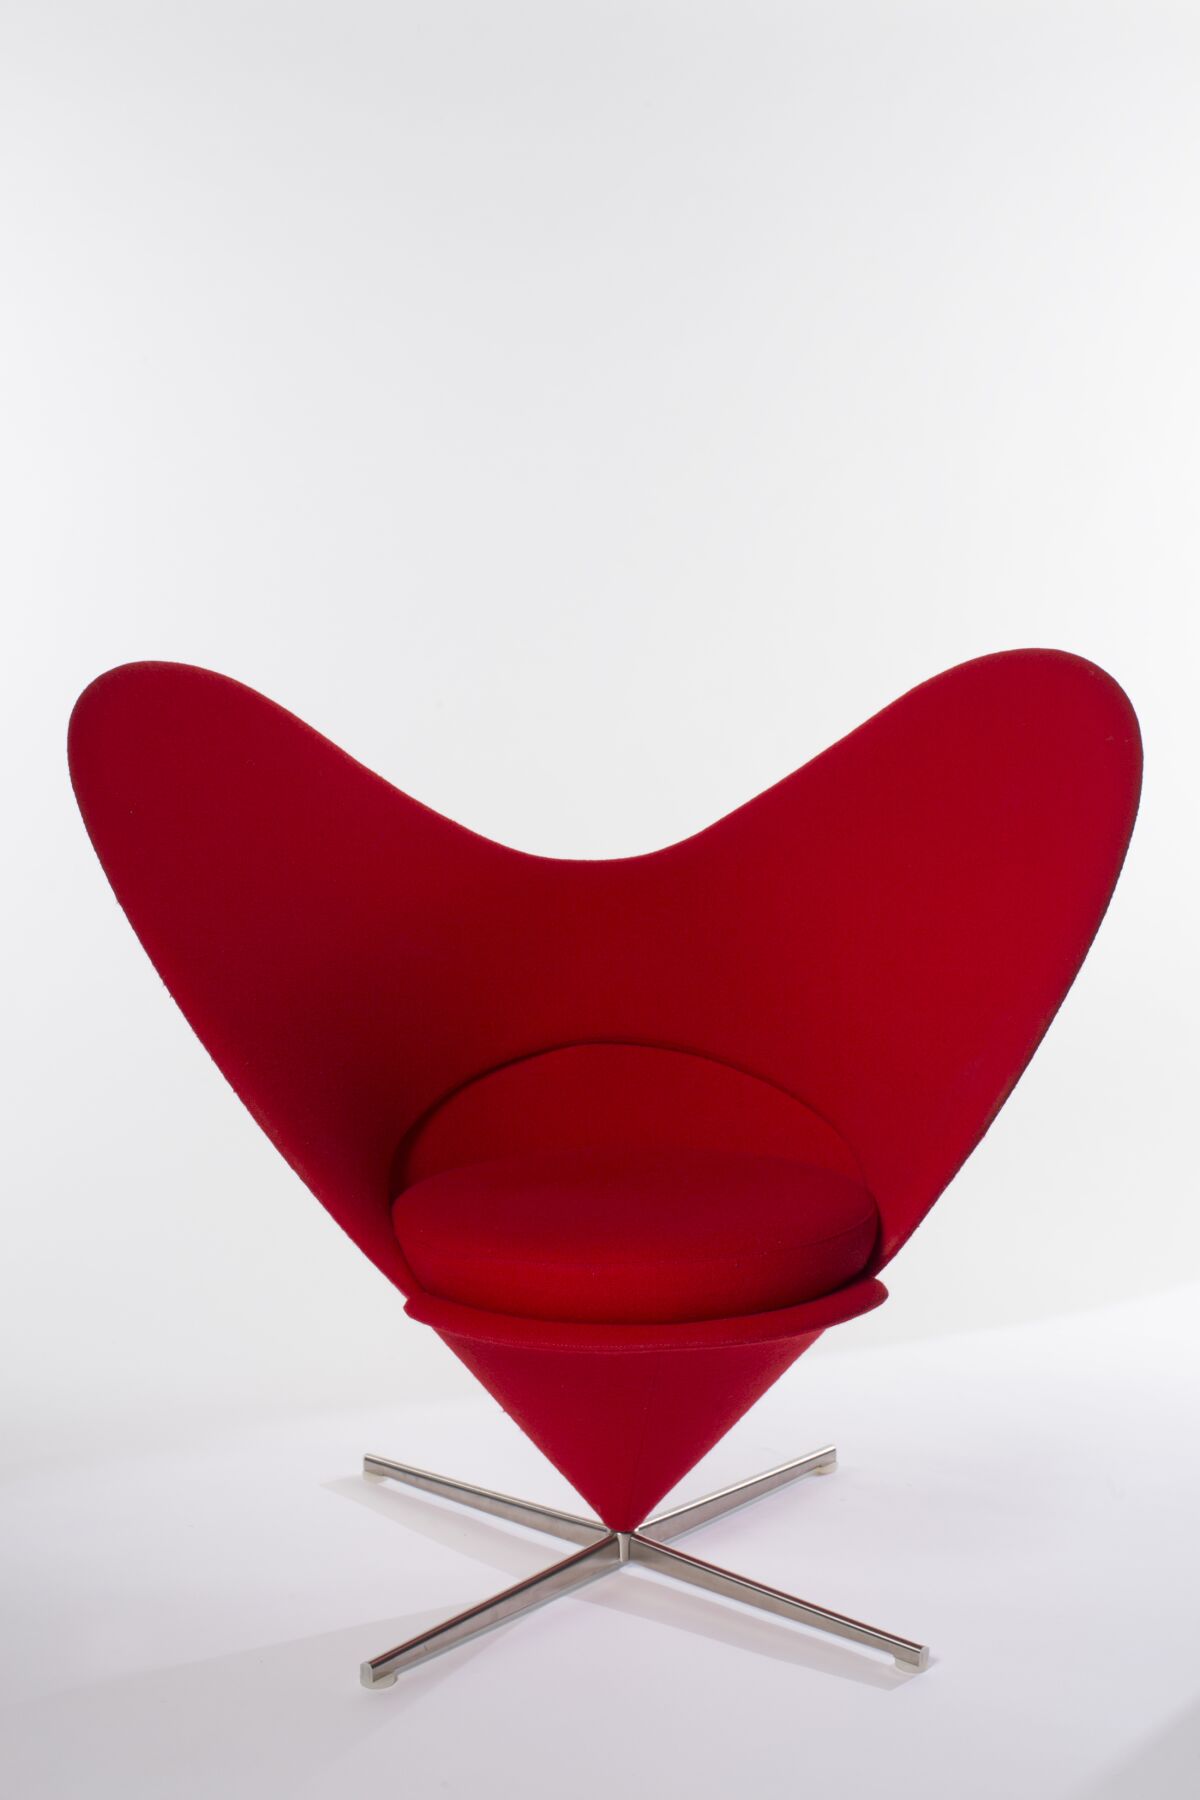 Verner Panton's Heart Cone chair